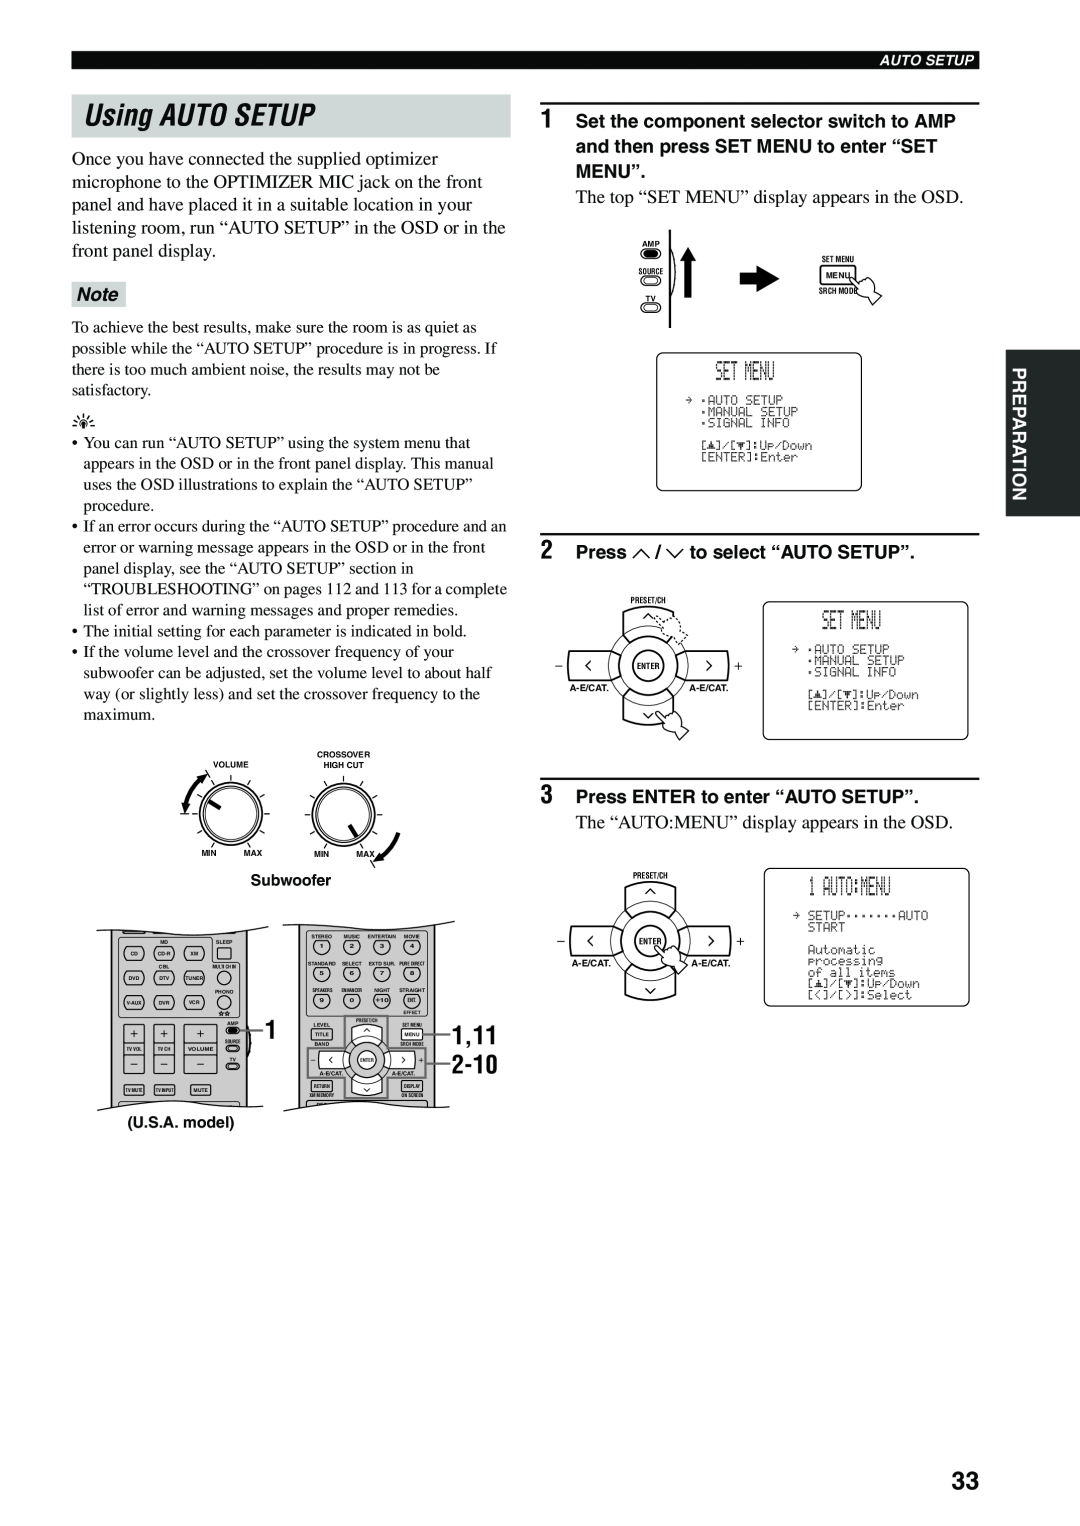 Yamaha HTR-5960 owner manual Using AUTO SETUP, Set Menu, Auto:Menu, 1,11, 2-10, 2Press u / d to select “AUTO SETUP” 